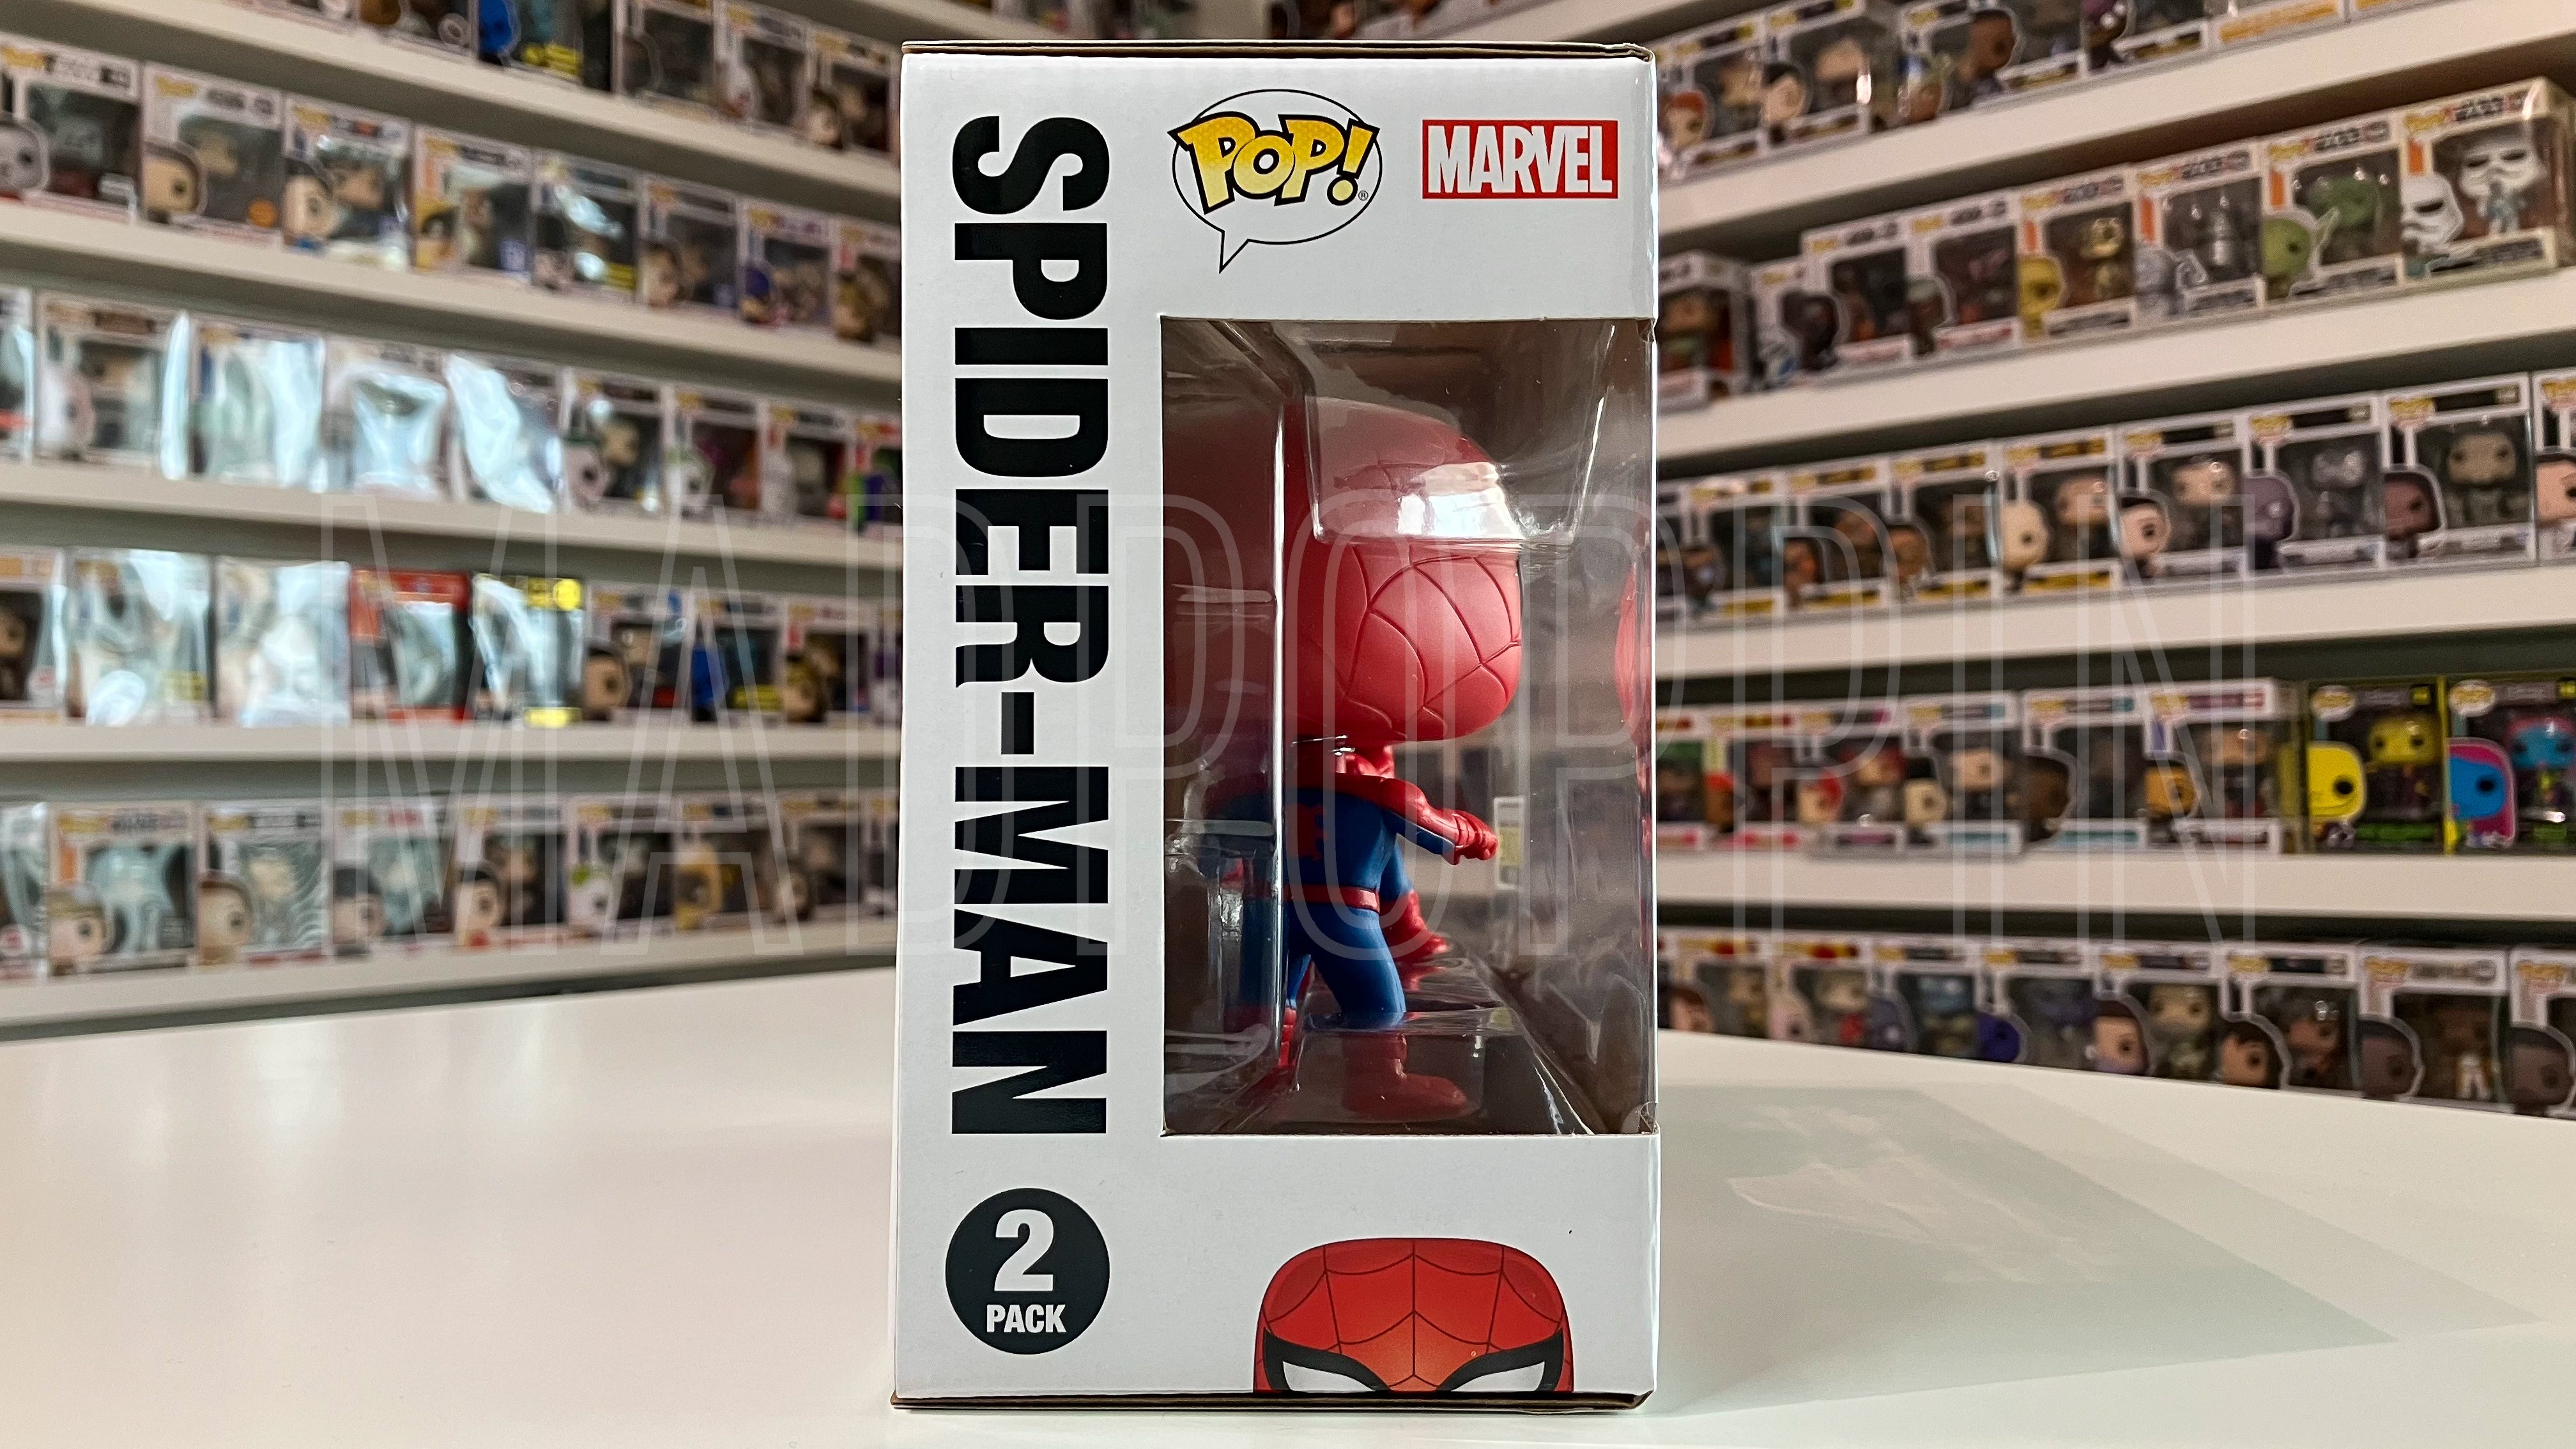 Funko POP! Marvel Spider-Man 60s Animated Series Spider-Man vs Spider-Man 2 Pack